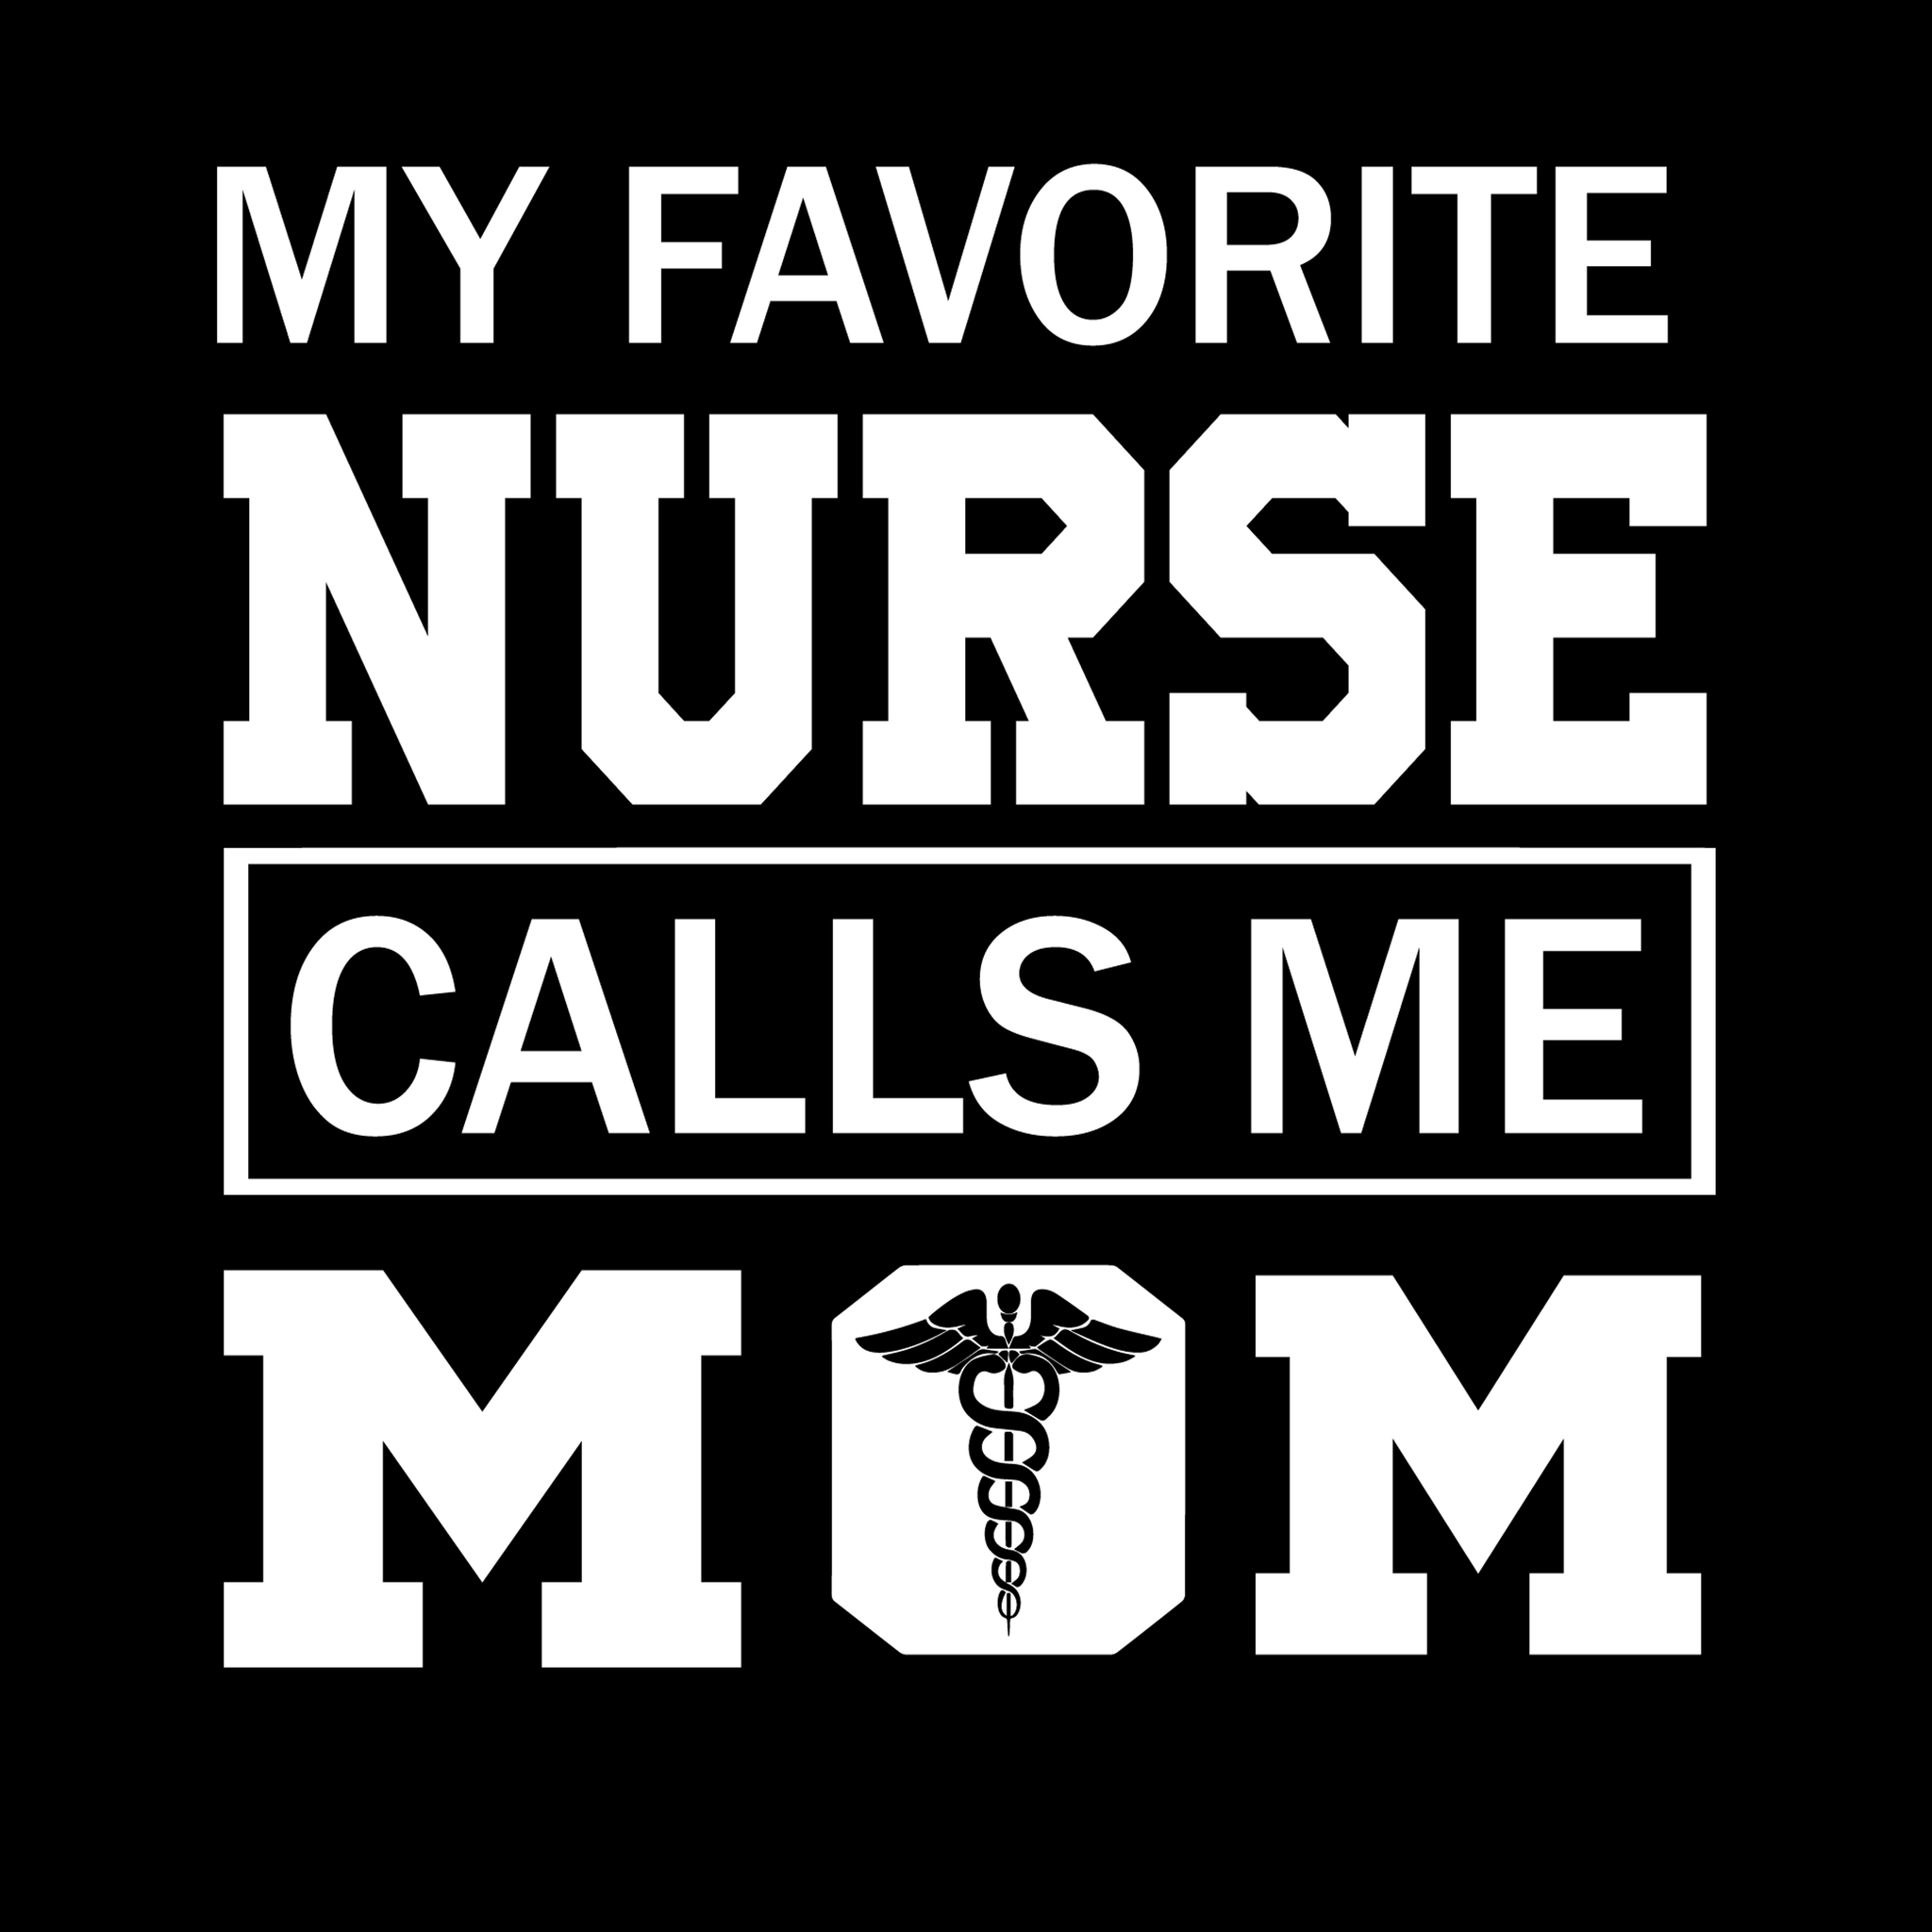 My favorite nurse calls me mom svg, My favorite nurse calls me mom, mother svg, nurse svg, mother's day svg